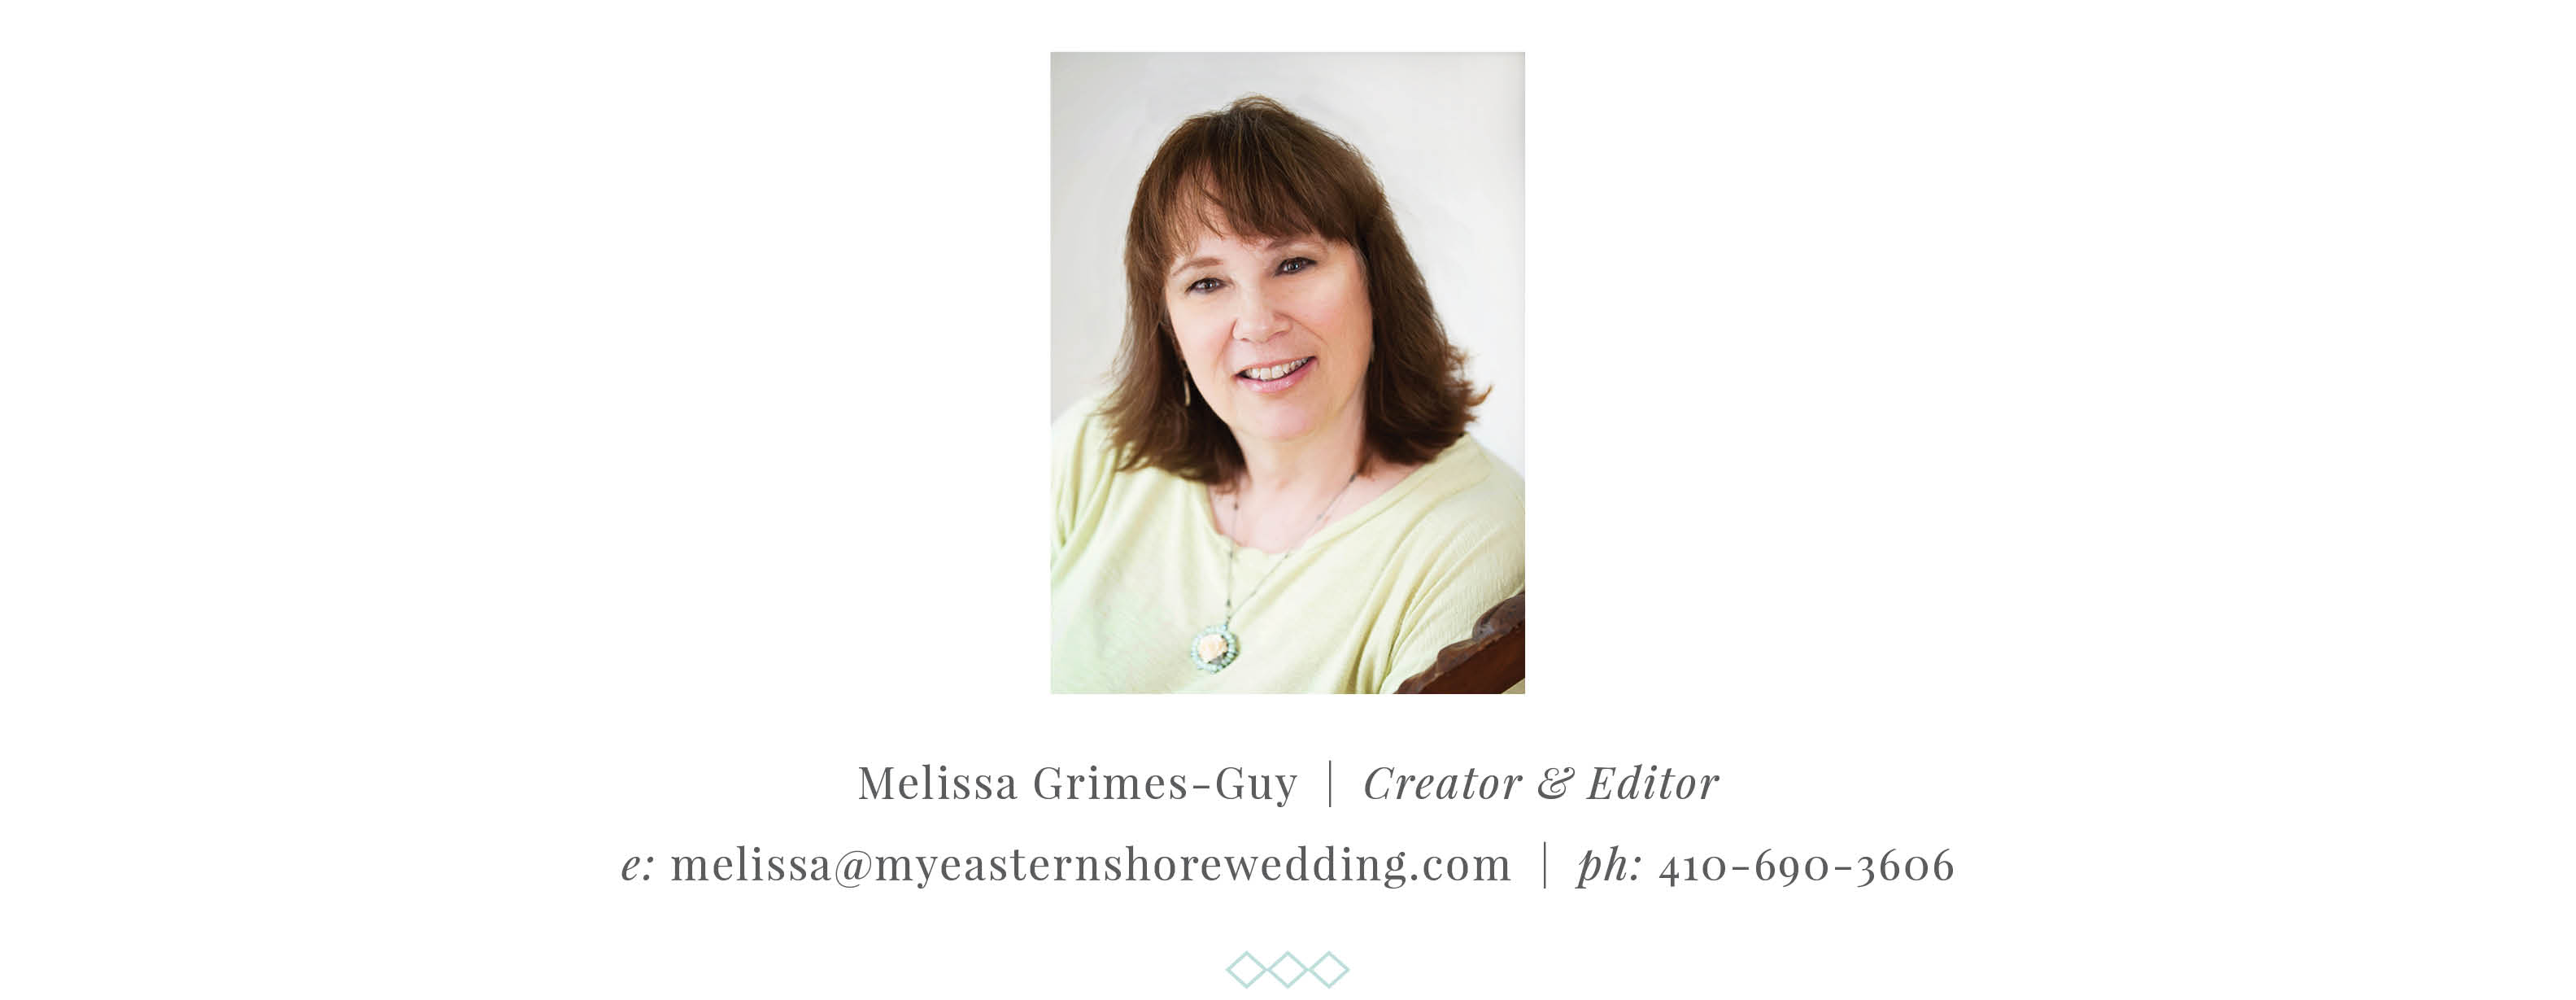 Melissa Grimes-Guy